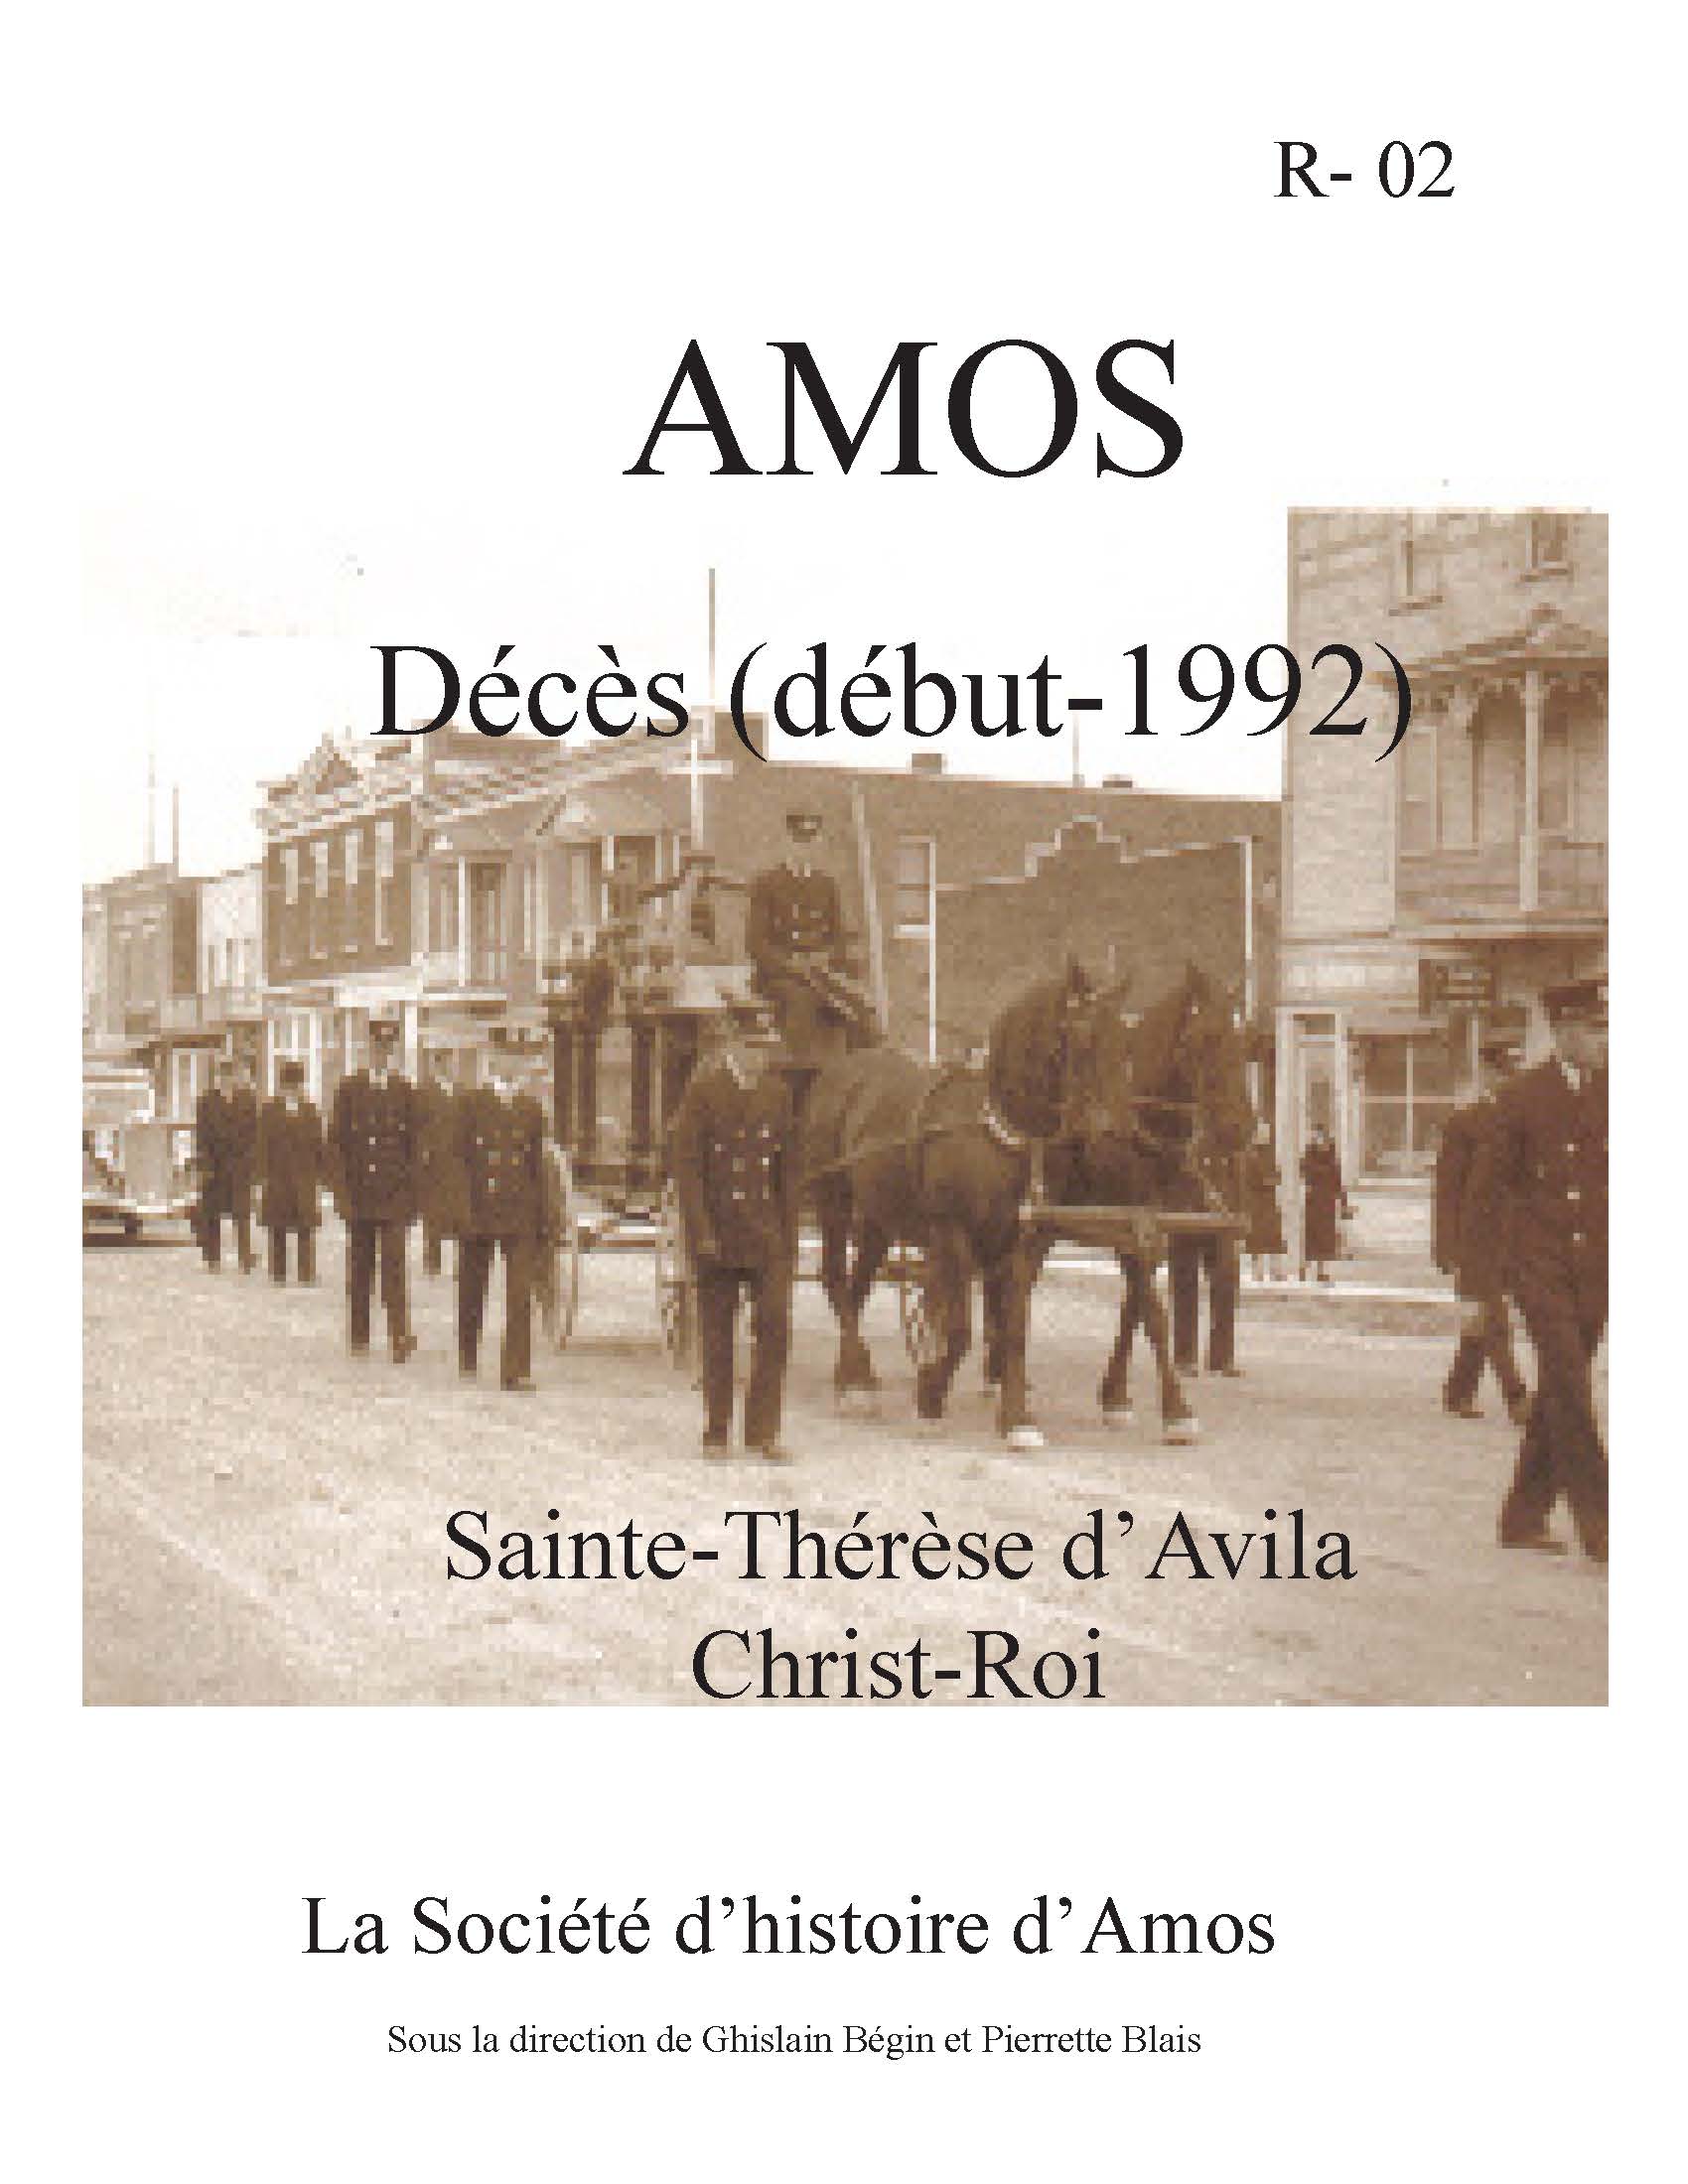 R-02 Amos (décès)